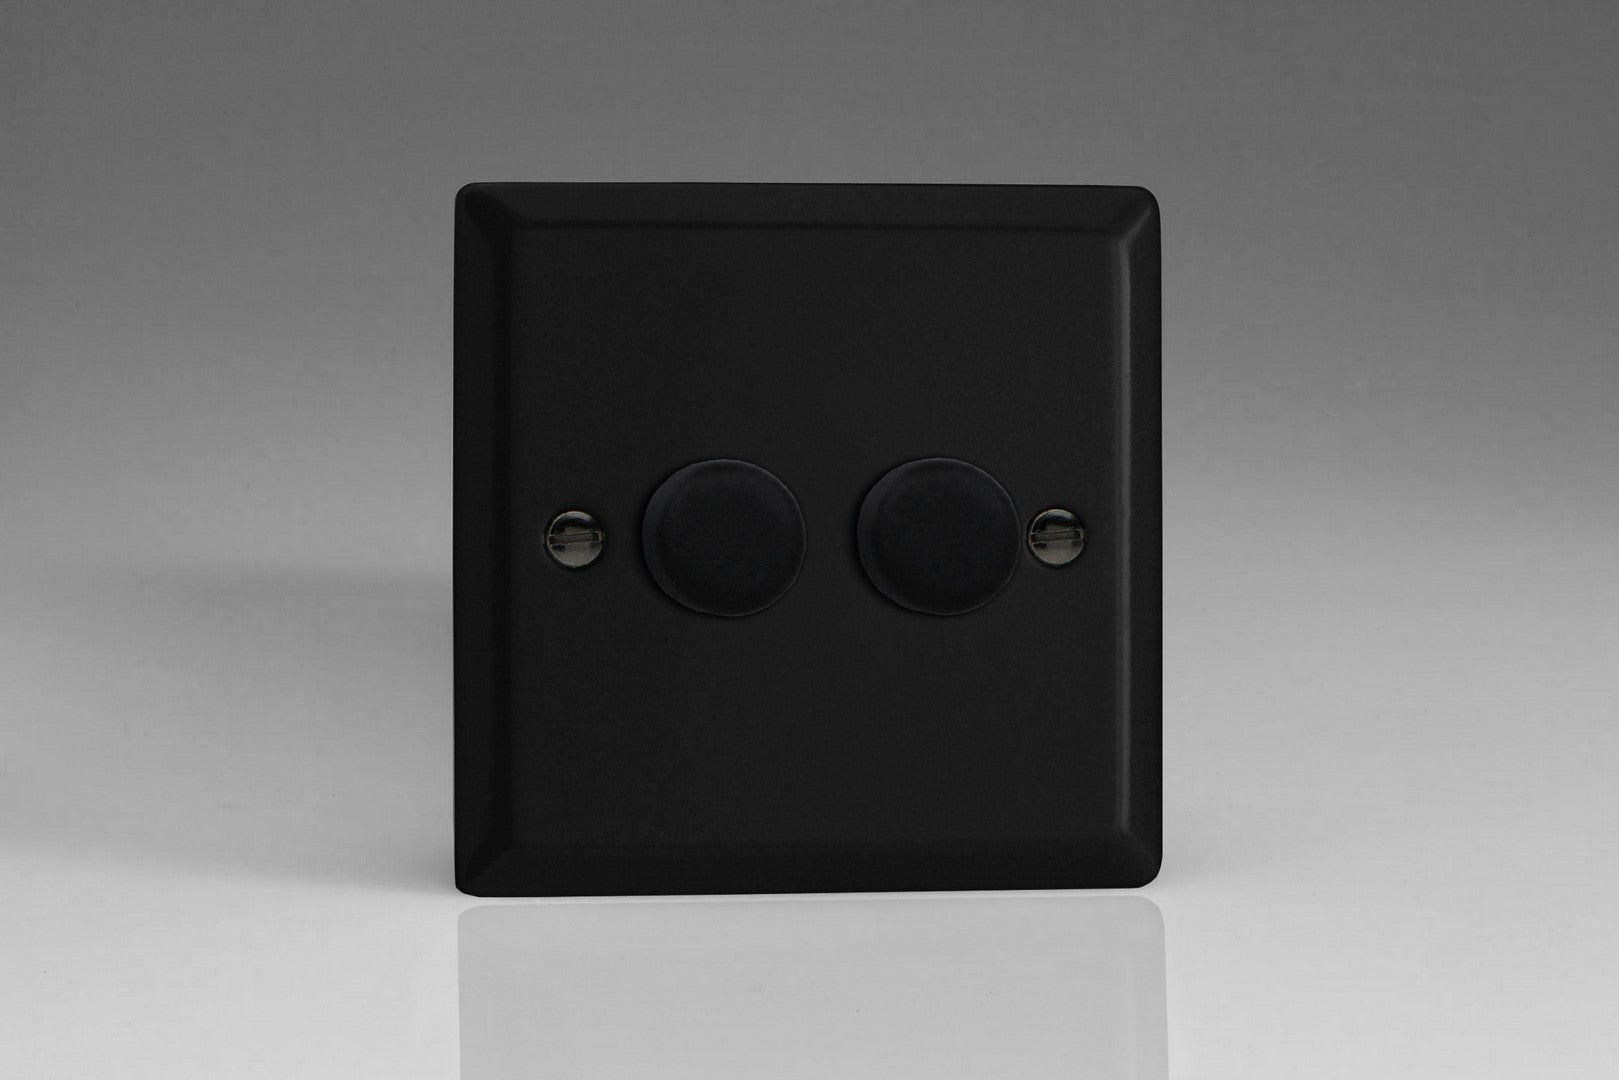 Varilight JYP252.MB Urban Matt Black 2-Gang 2-Way Push-On/Off Rotary LED Dimmer 2 x 0-100W (1-10 LEDs)